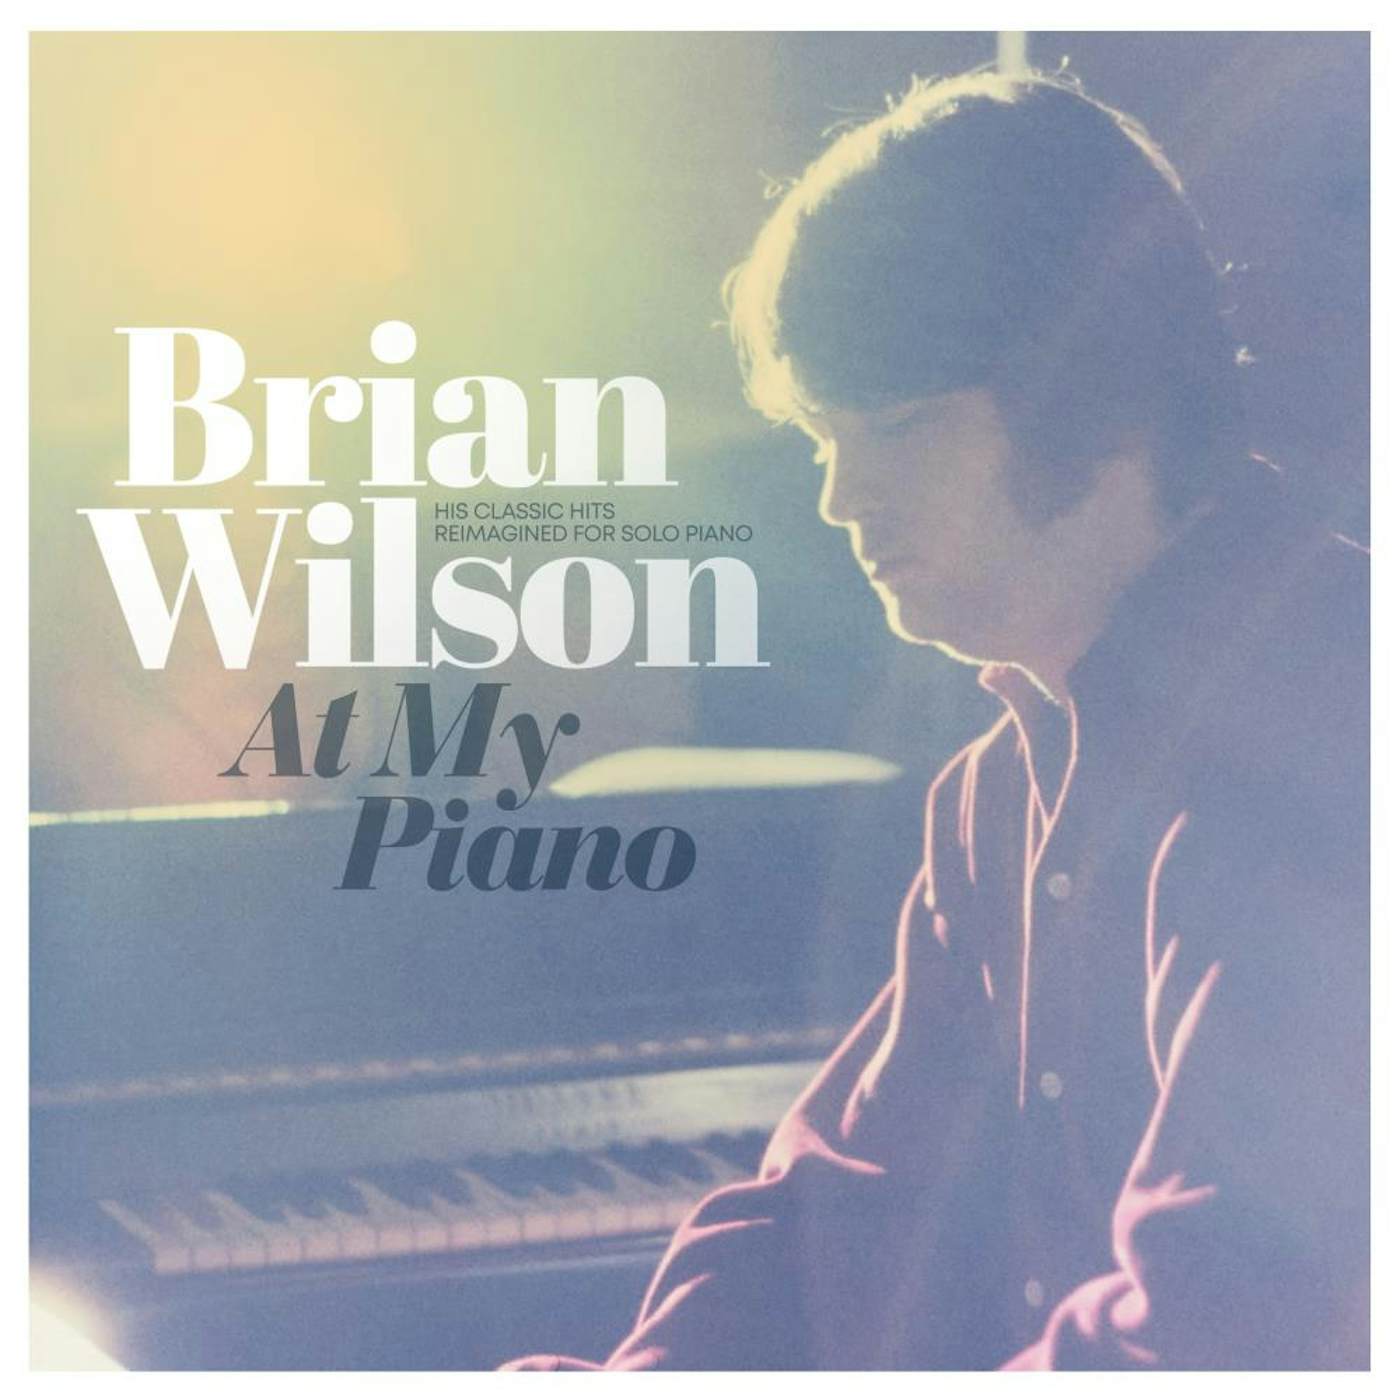 Brian Wilson At My Piano Vinyl Record